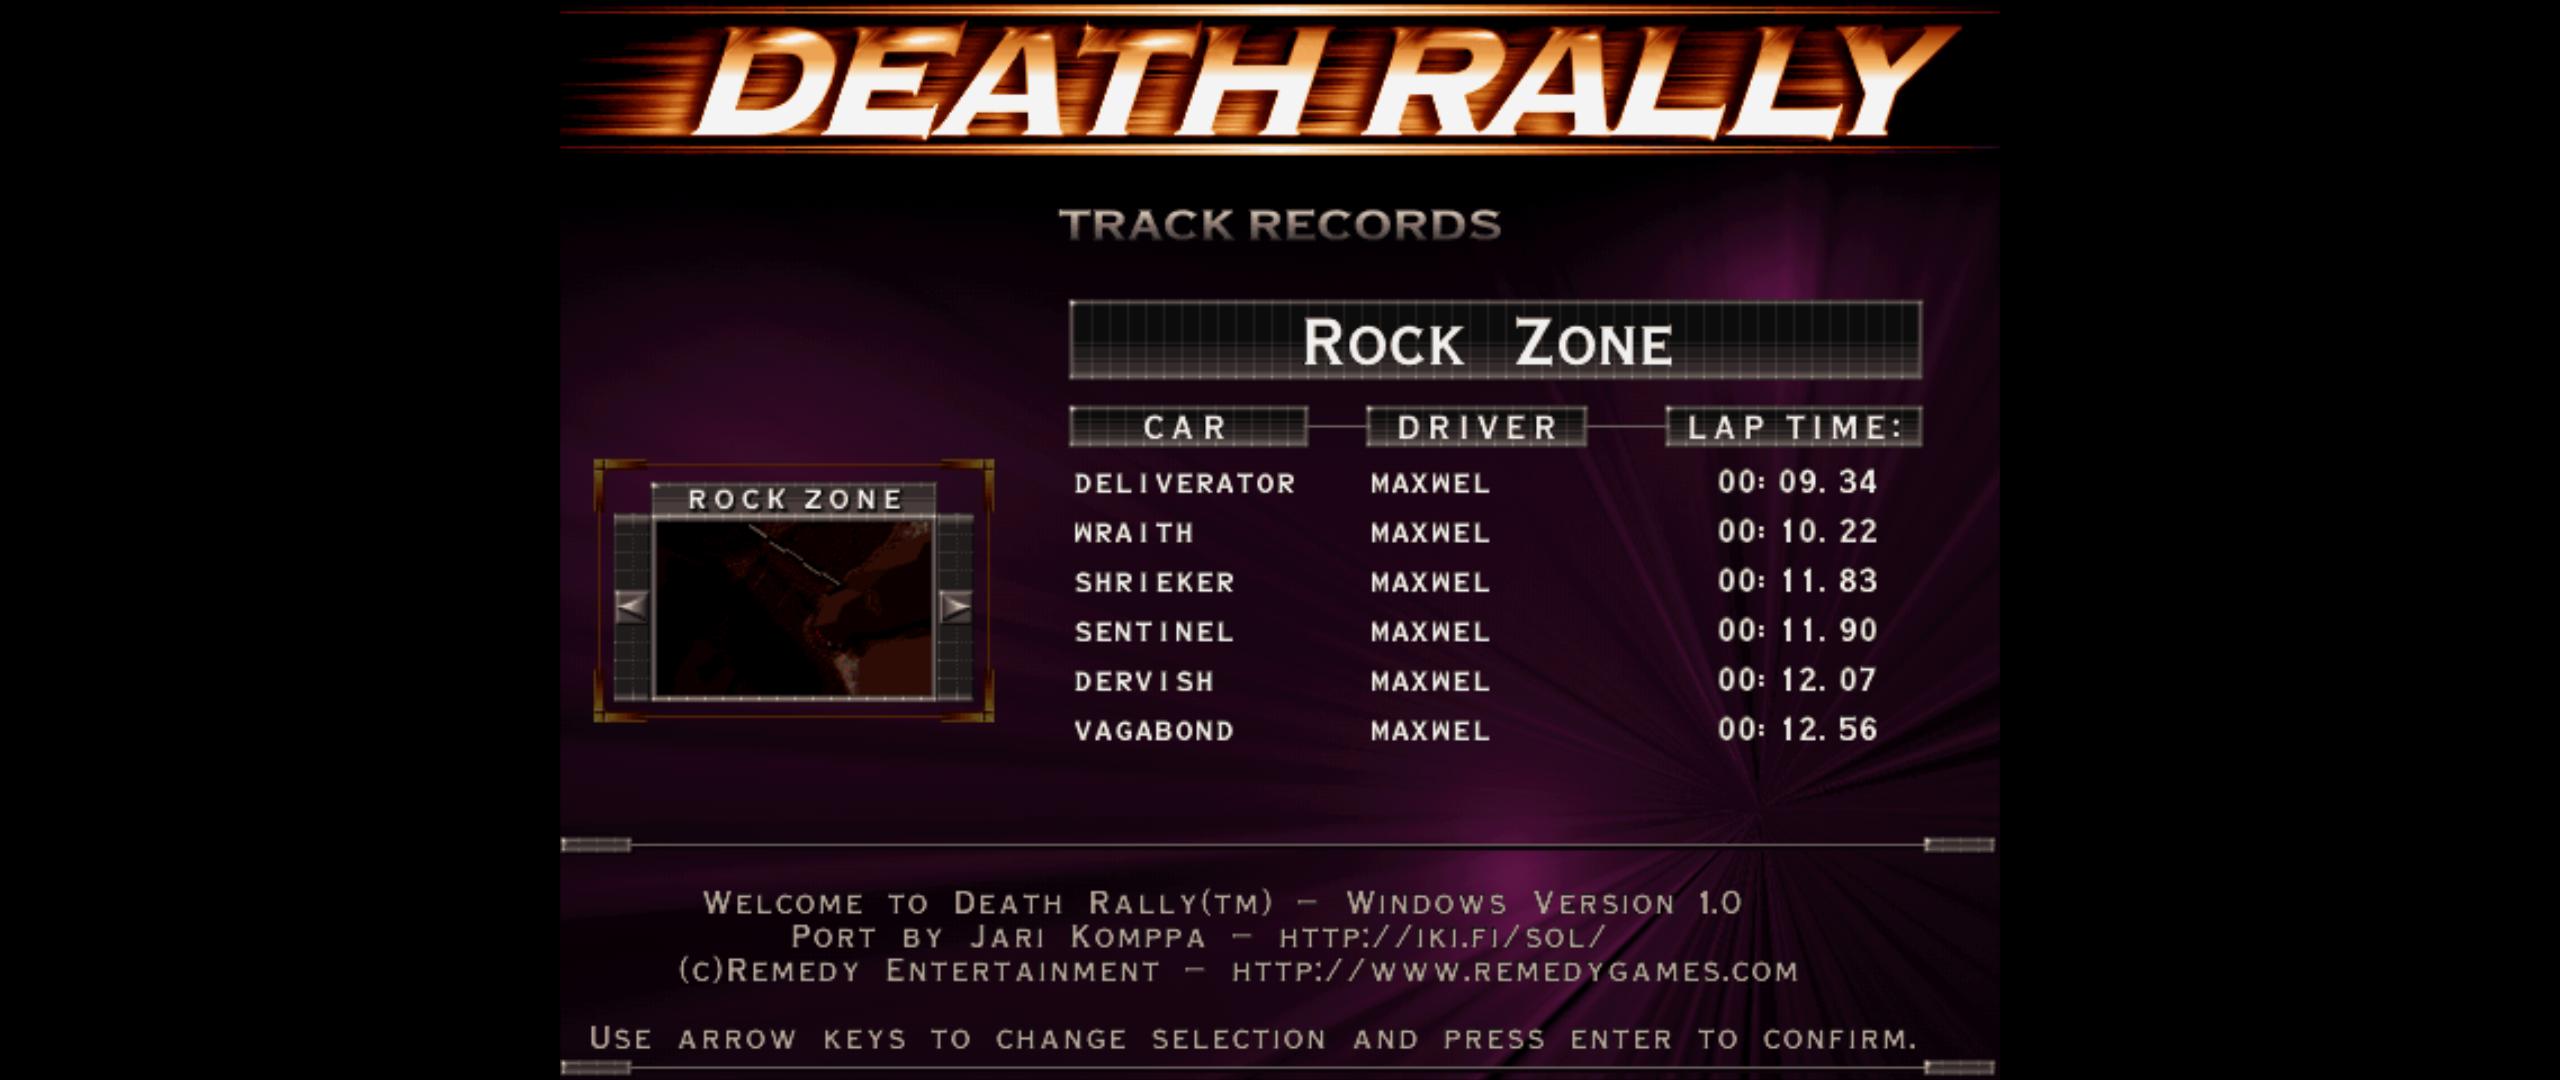 Maxwel: Death Rally [Rock Zone, Dervish Car] (PC) 0:00:12.07 points on 2016-03-03 01:51:45